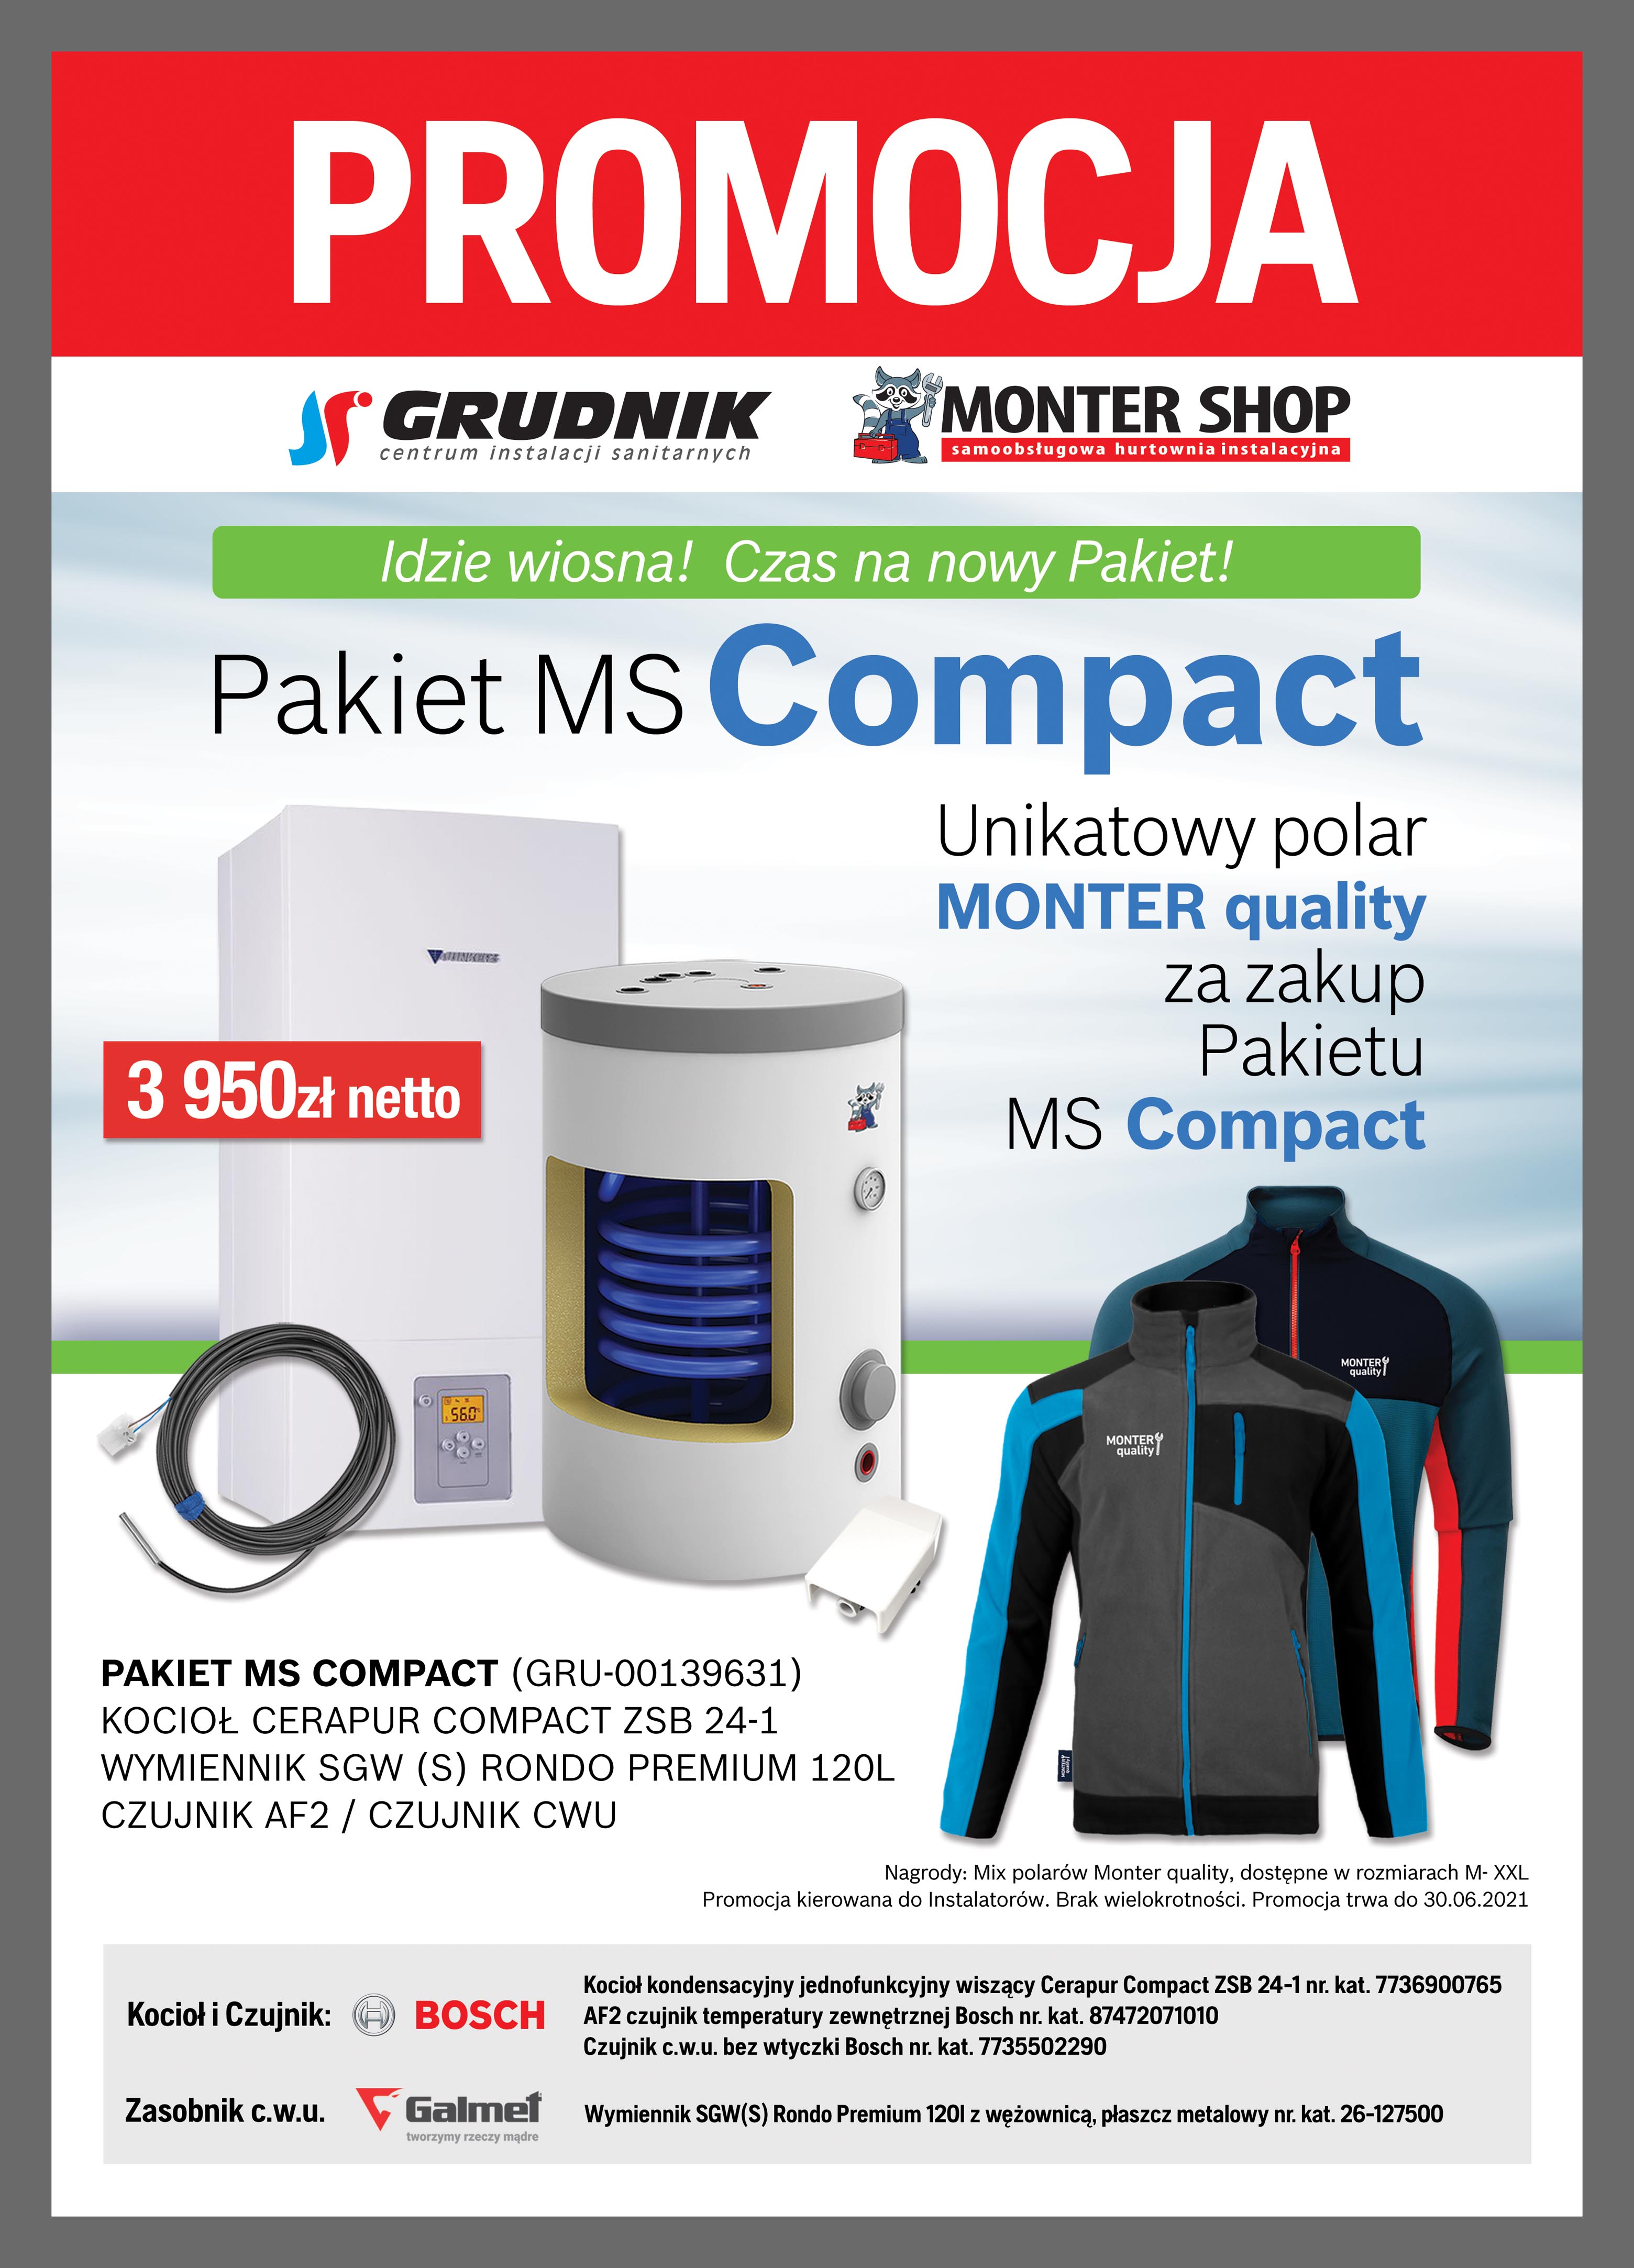 Pakiet MS Compact